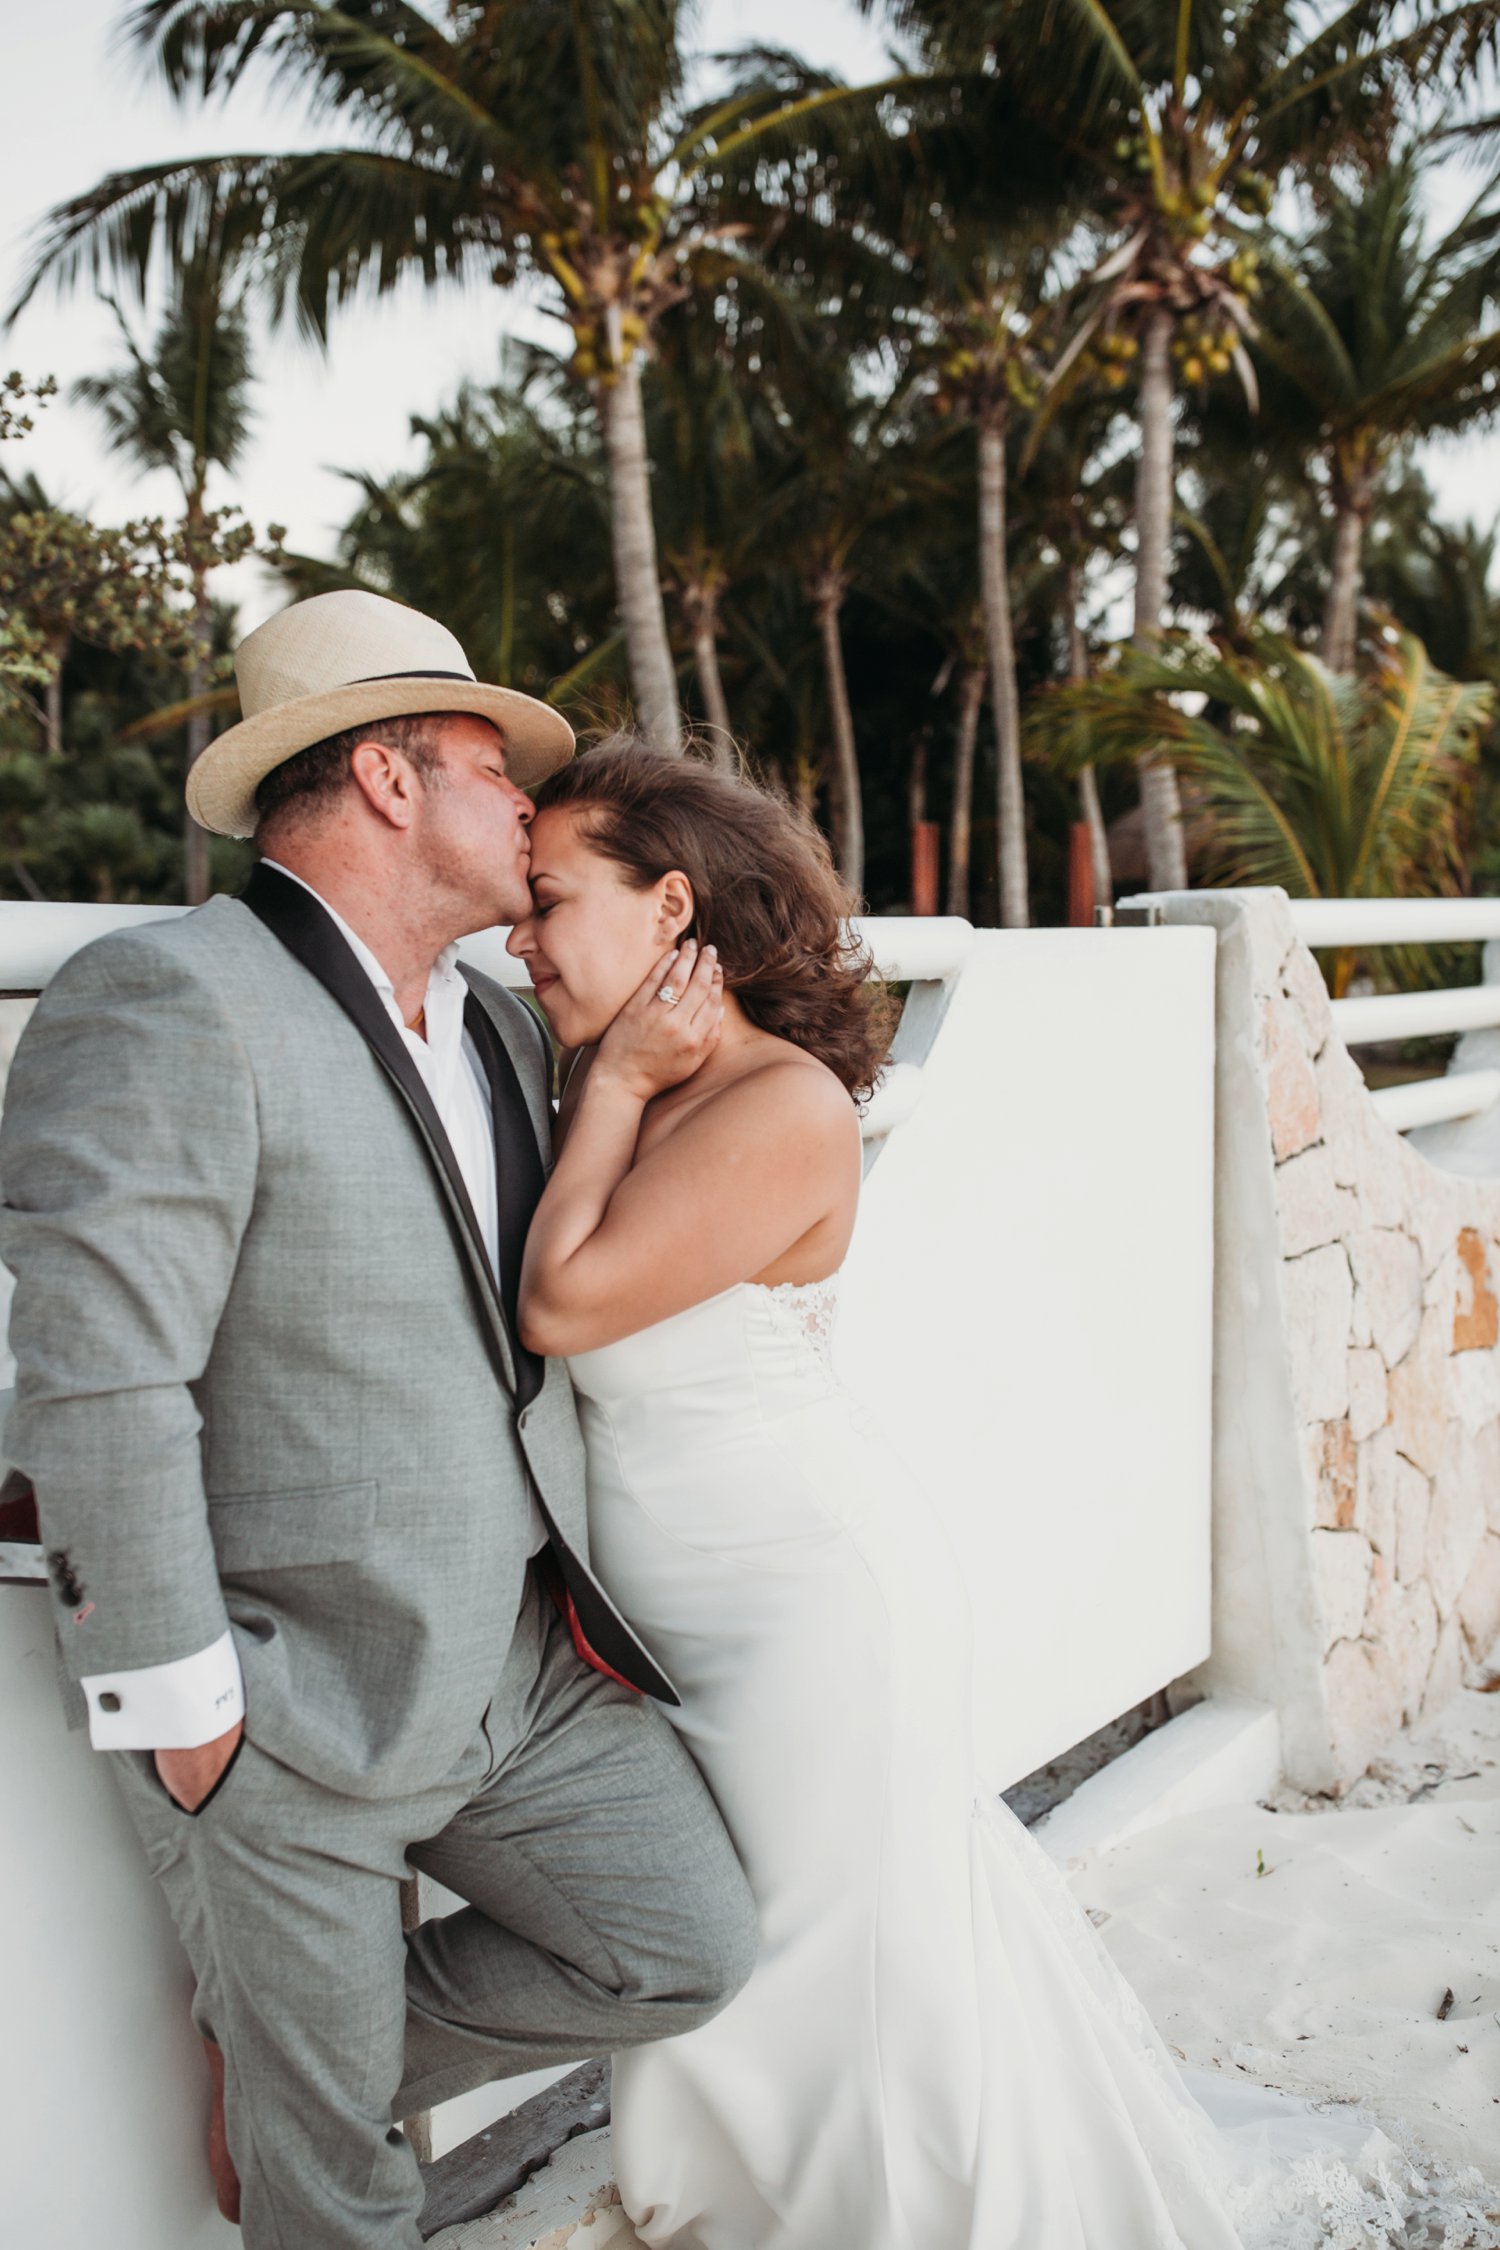  images by feliciathephotographer.com | destination wedding photographer | mexico | tropical | fiji | venue | azul beach resort | riviera maya | sunrise picture | bridal portraits | palm trees | romantic | forehead kiss | 